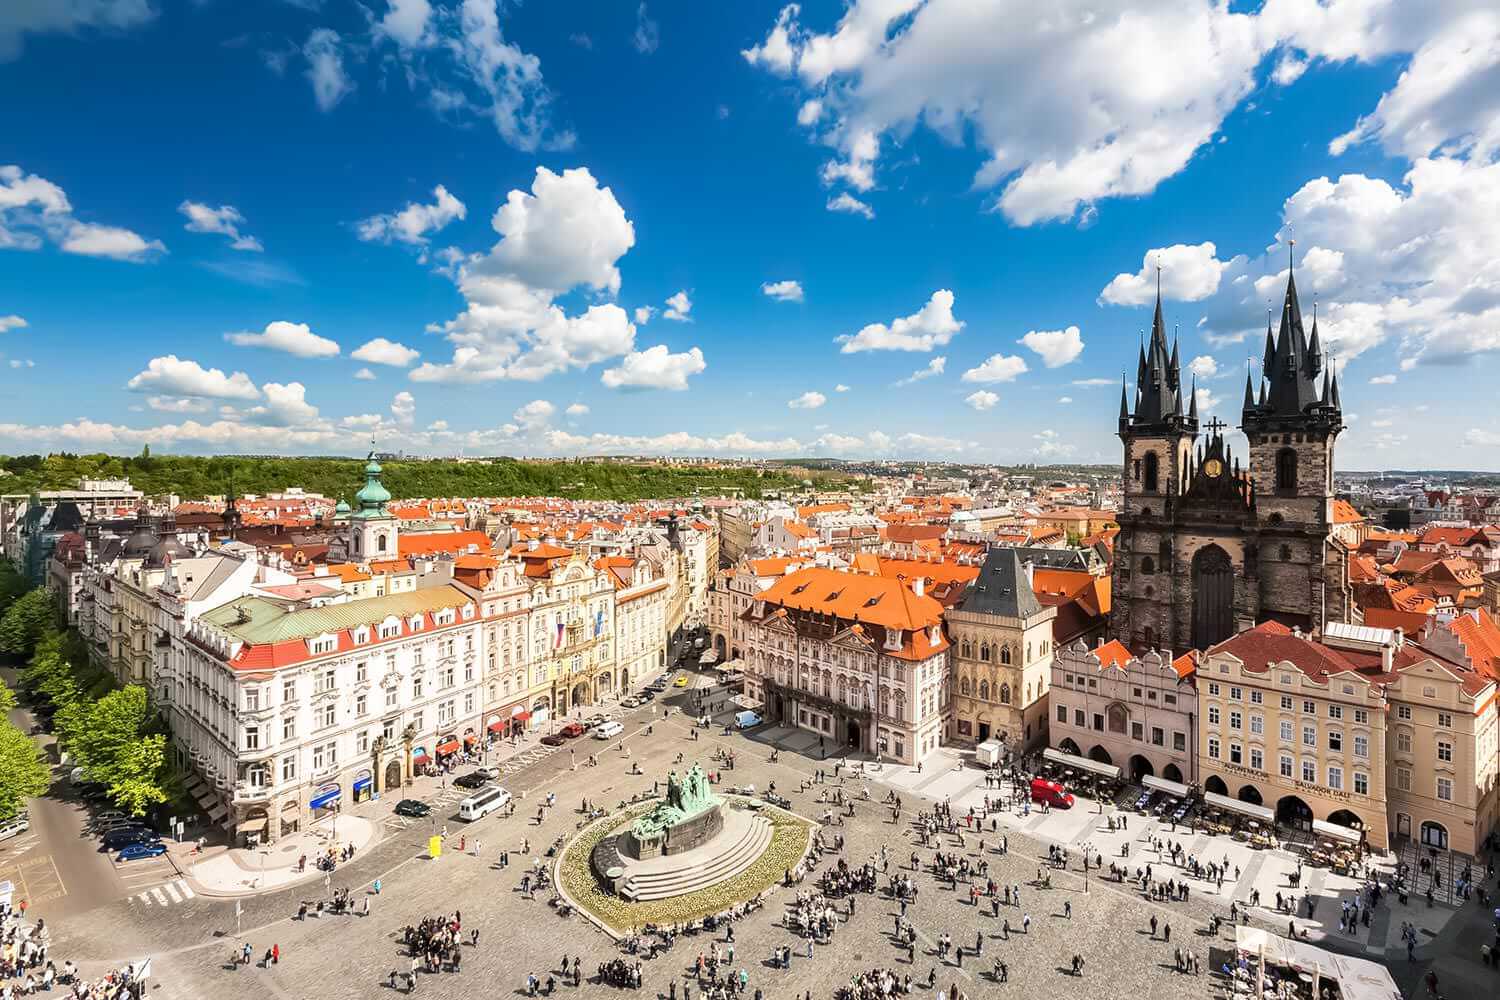 Aerial view of Czechia